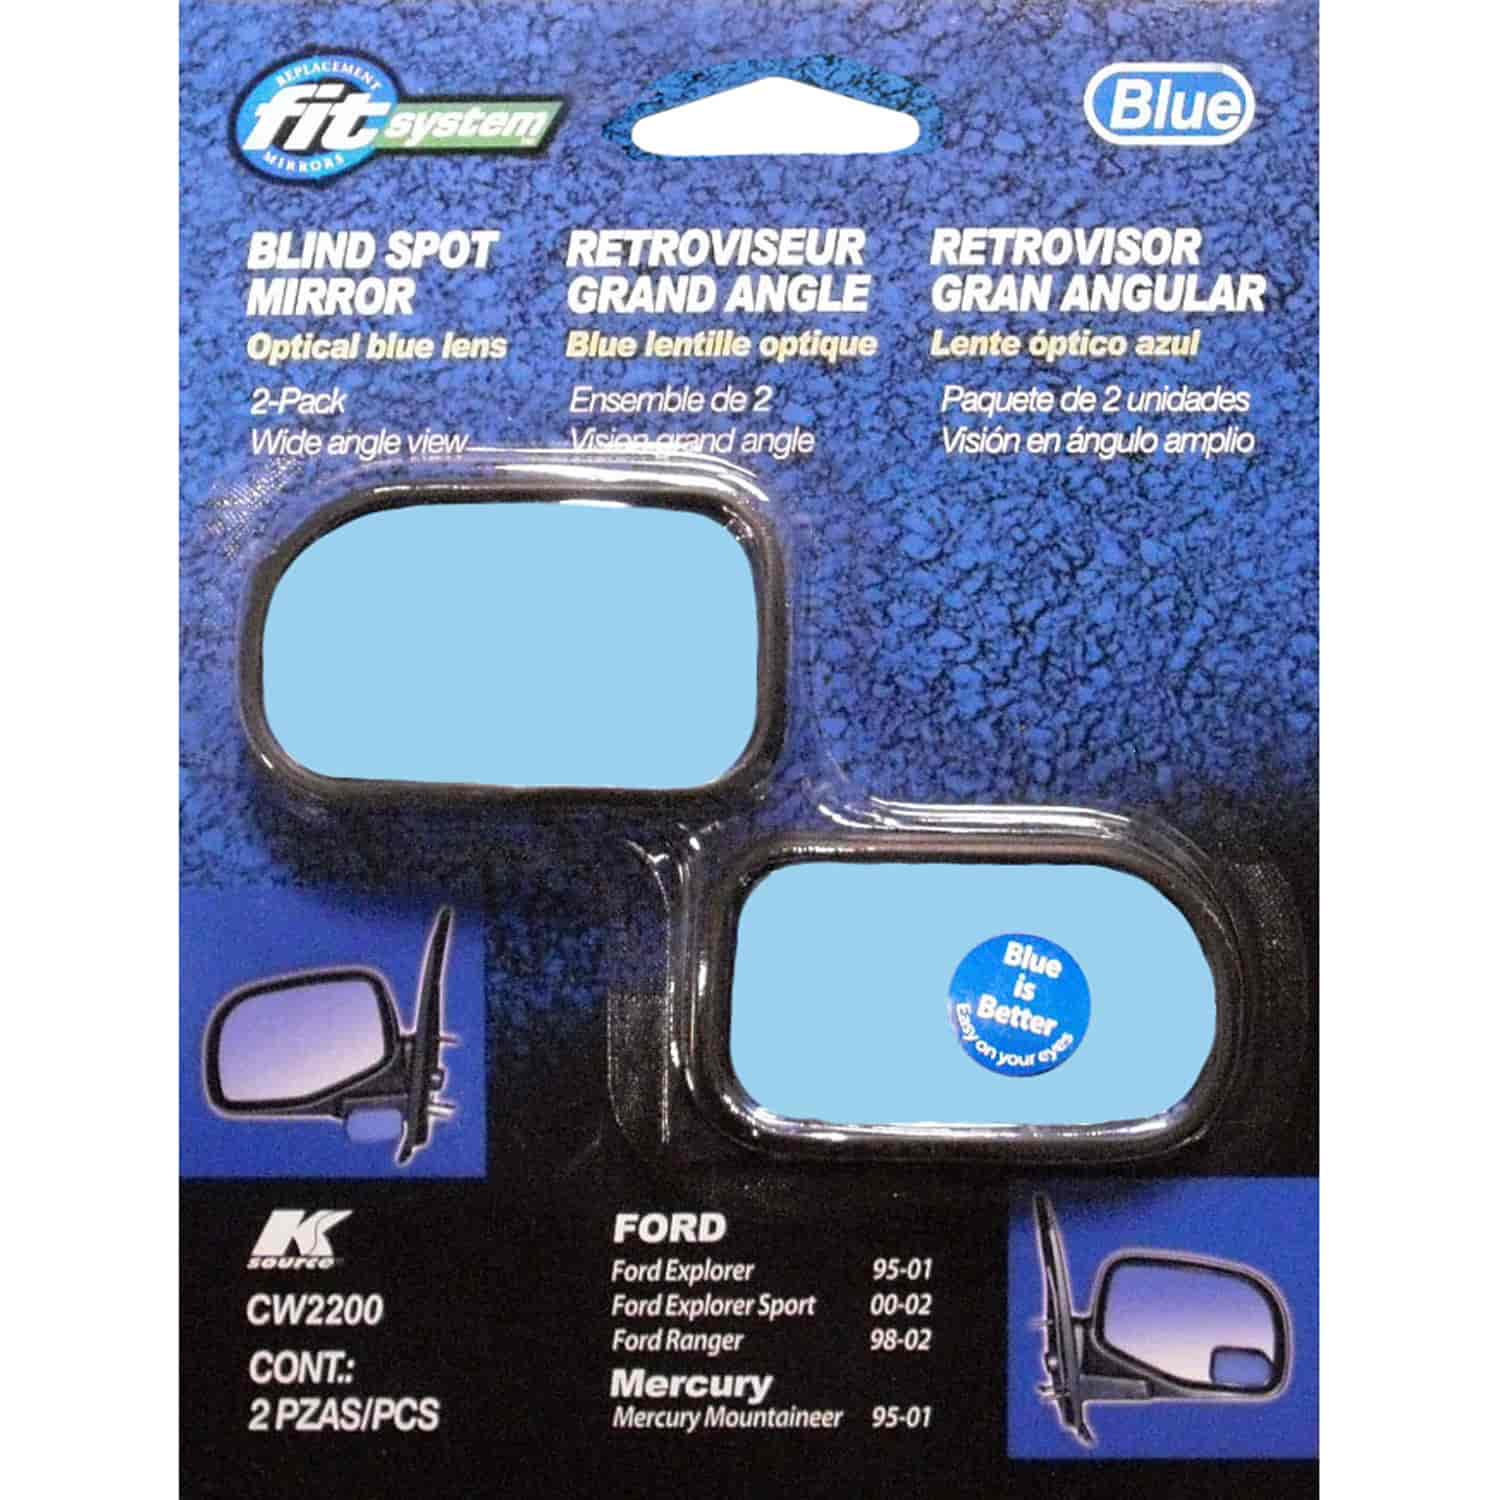 Custom Fit Spot Mirror Ford 95 - 02 2 Pack Optical Blue Lens Optical Blue Lens to Reduce Glare Custo